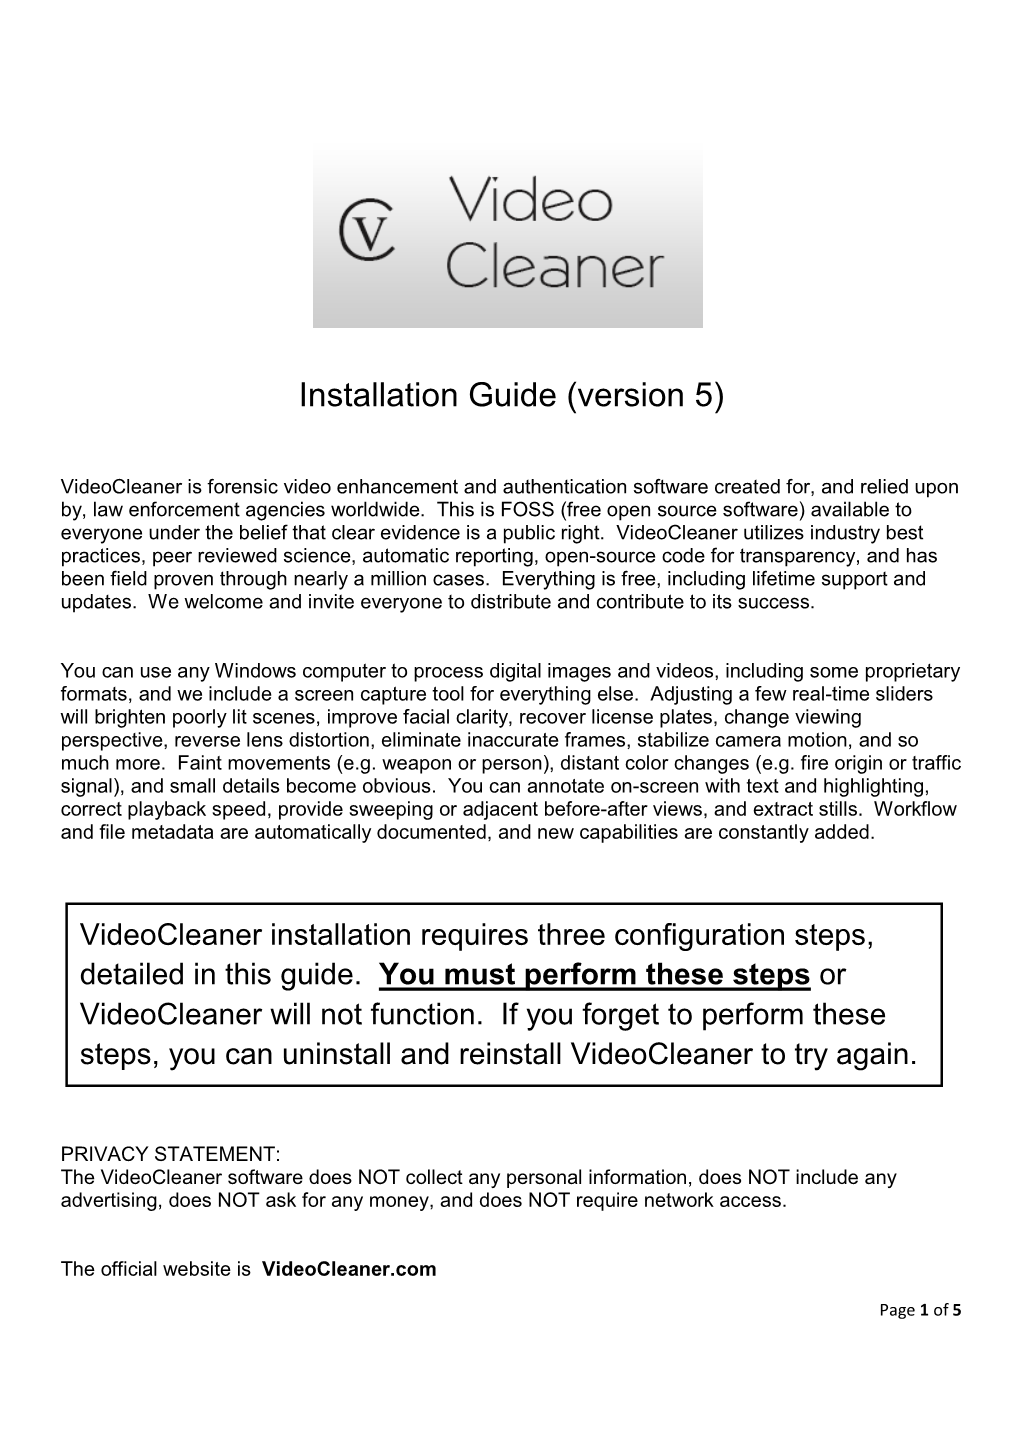 Installation Guide (Version 5)